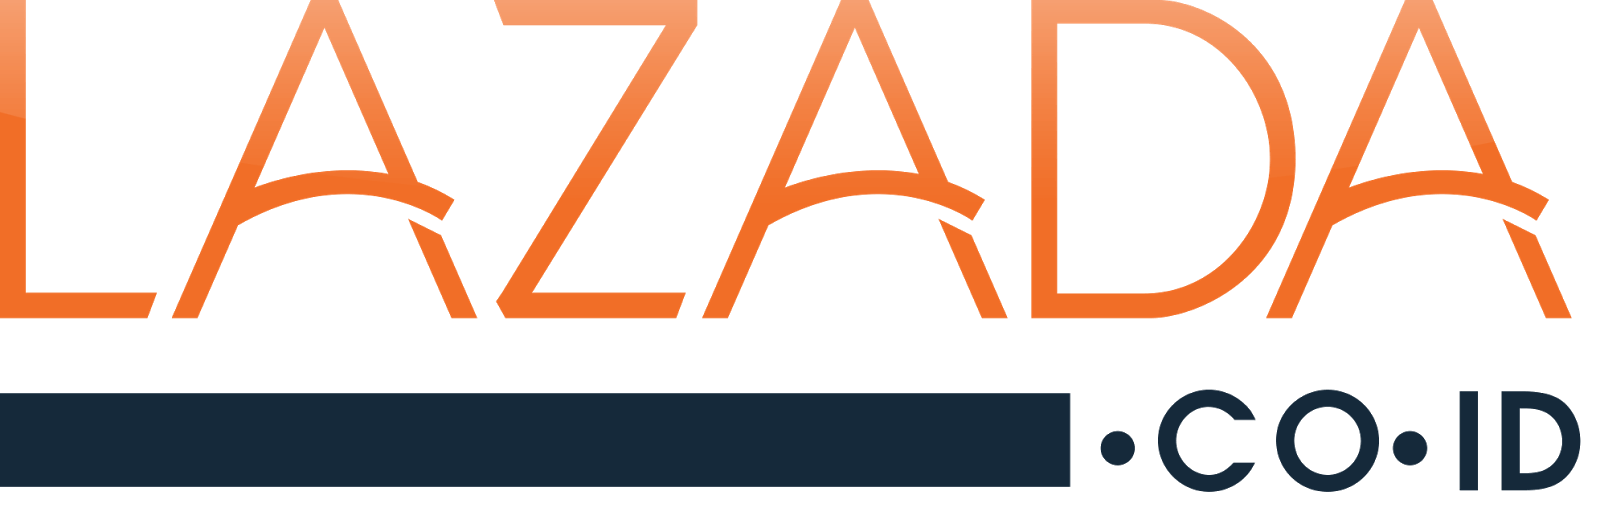 Lazada Logo - Logo Lazada